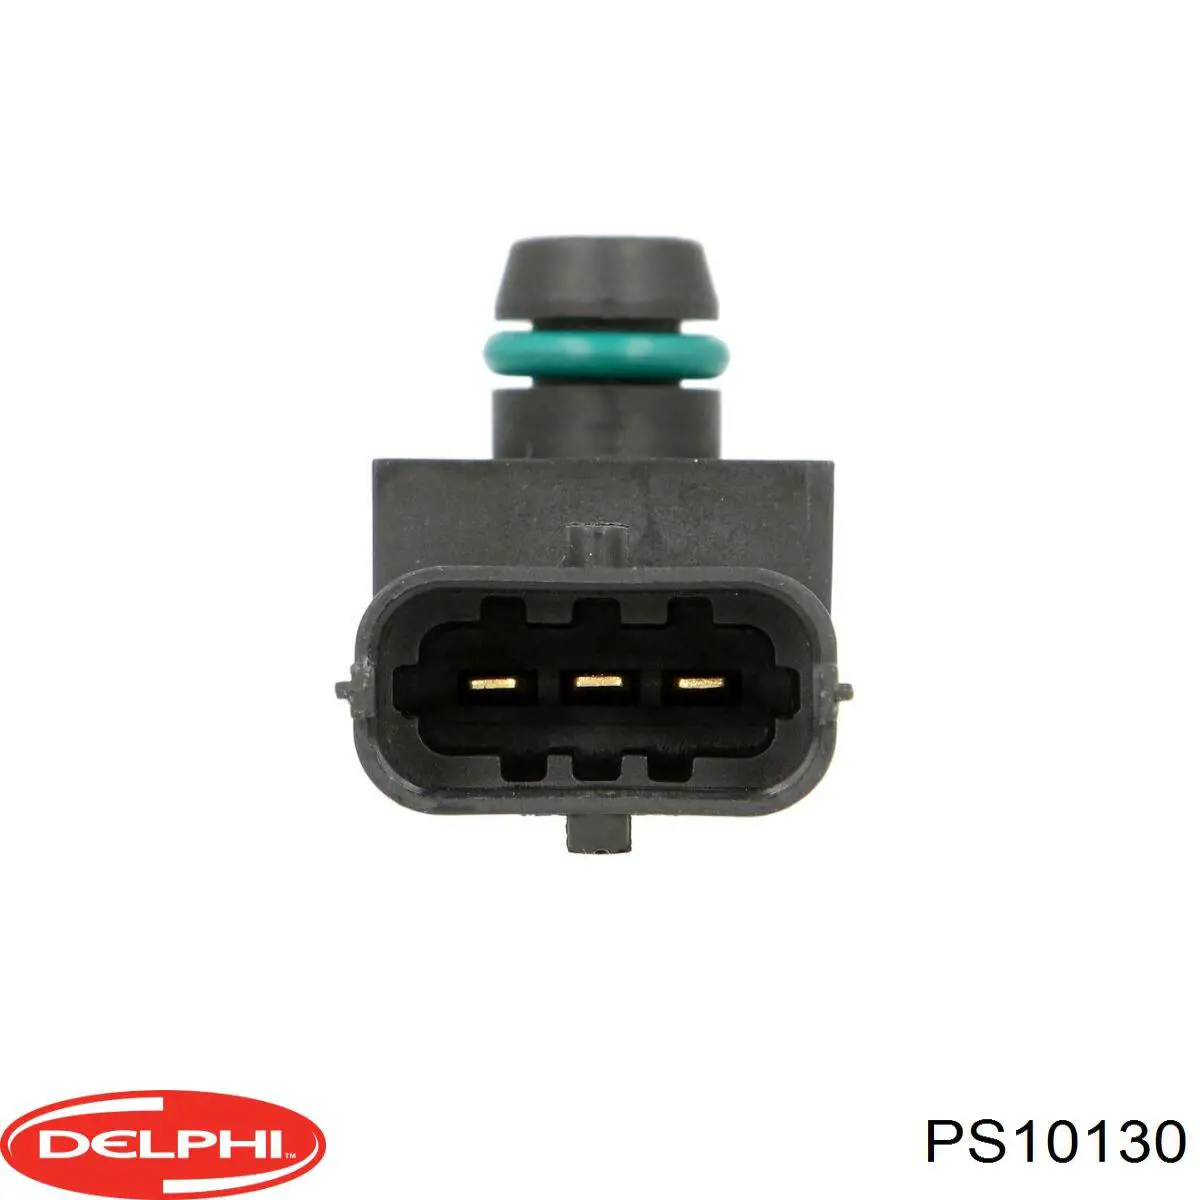 PS10130 Delphi sensor de presion de carga (inyeccion de aire turbina)